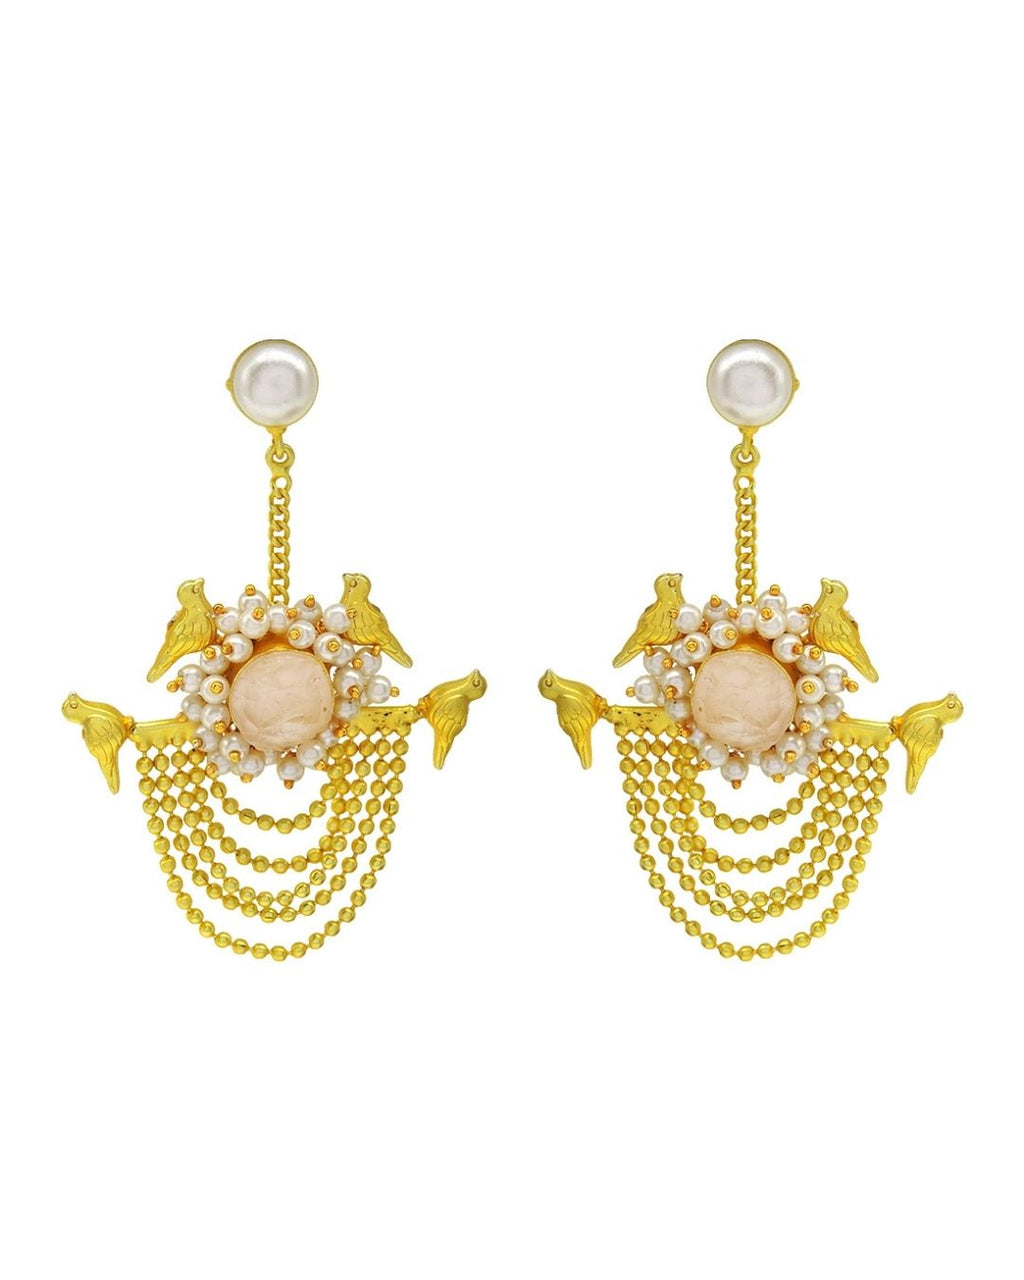 Sora Pearl Earrings (Rose Quartz) - Earrings - Handcrafted Jewellery - Made in India - Dubai Jewellery, Fashion & Lifestyle - Dori